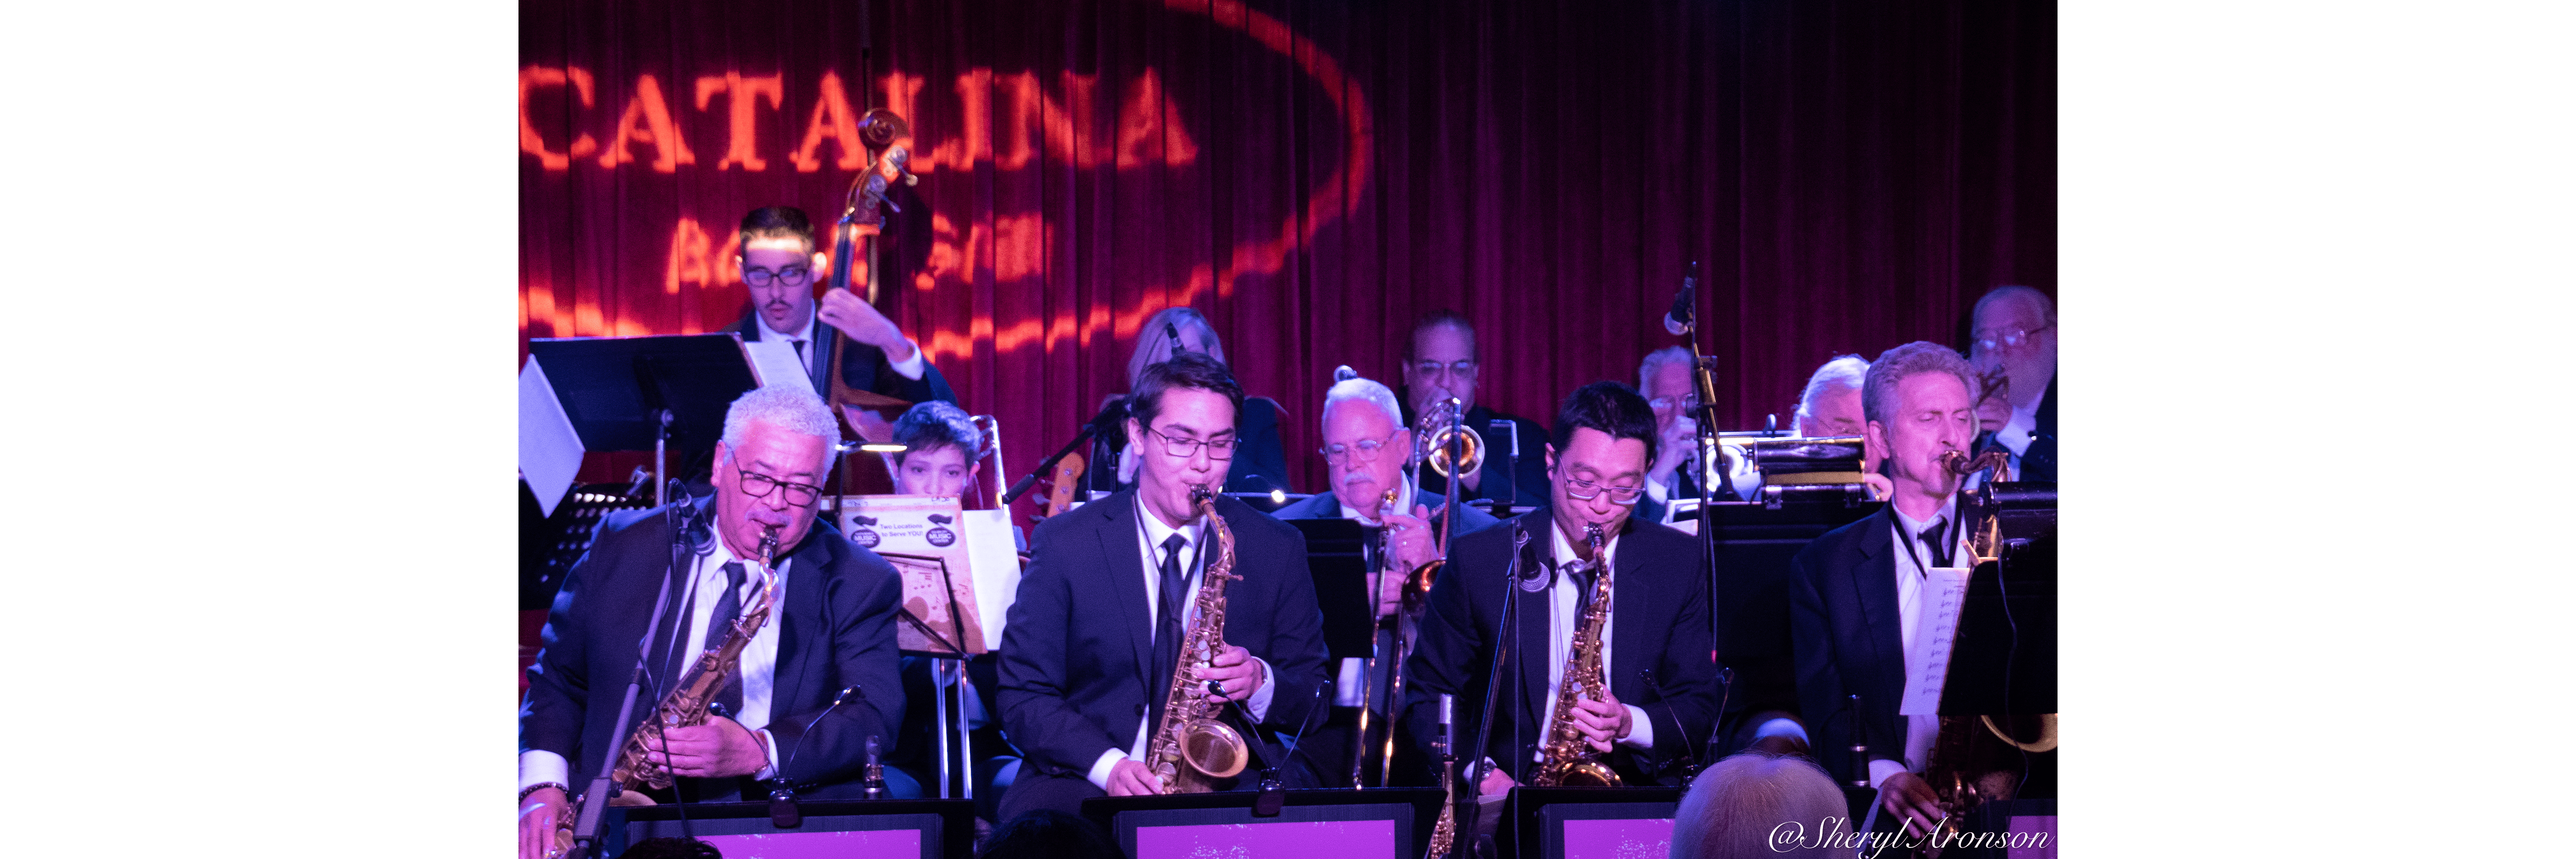 Los Angeles Jazz Orchestra photo by Sheryl Aronson, courtesy of David Payne